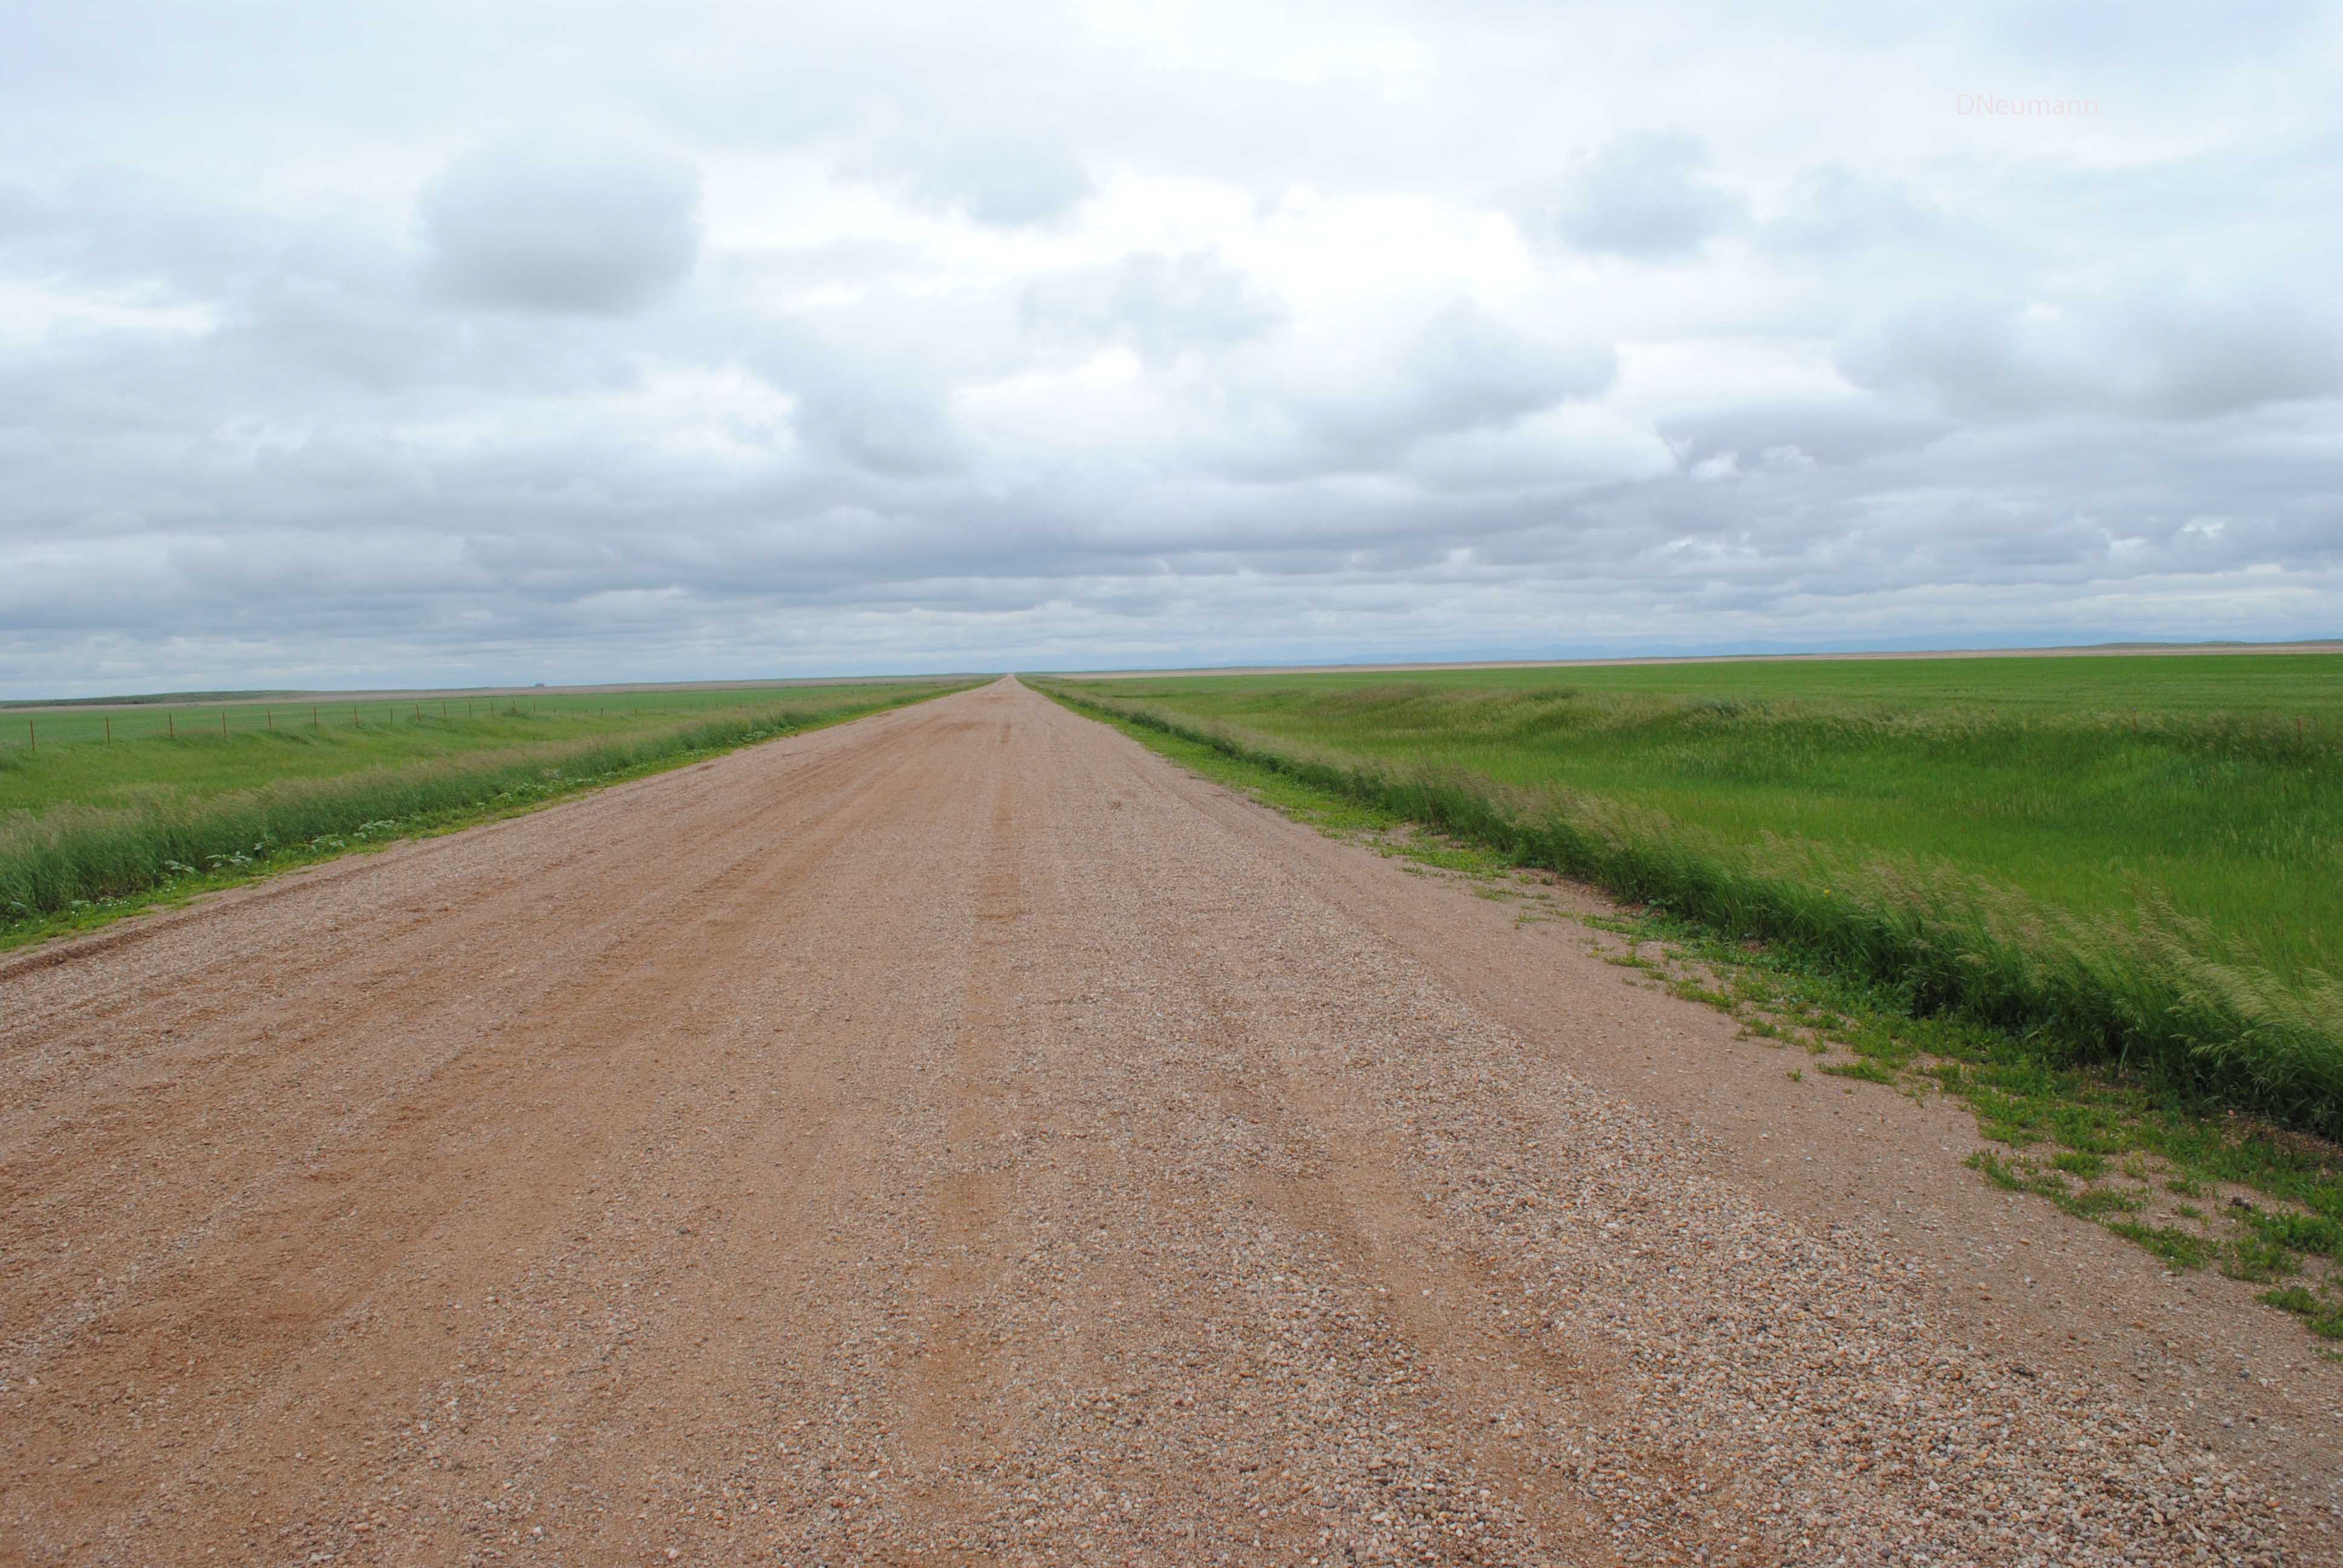 The Longest Dirt Road In the World - aroundustyroads